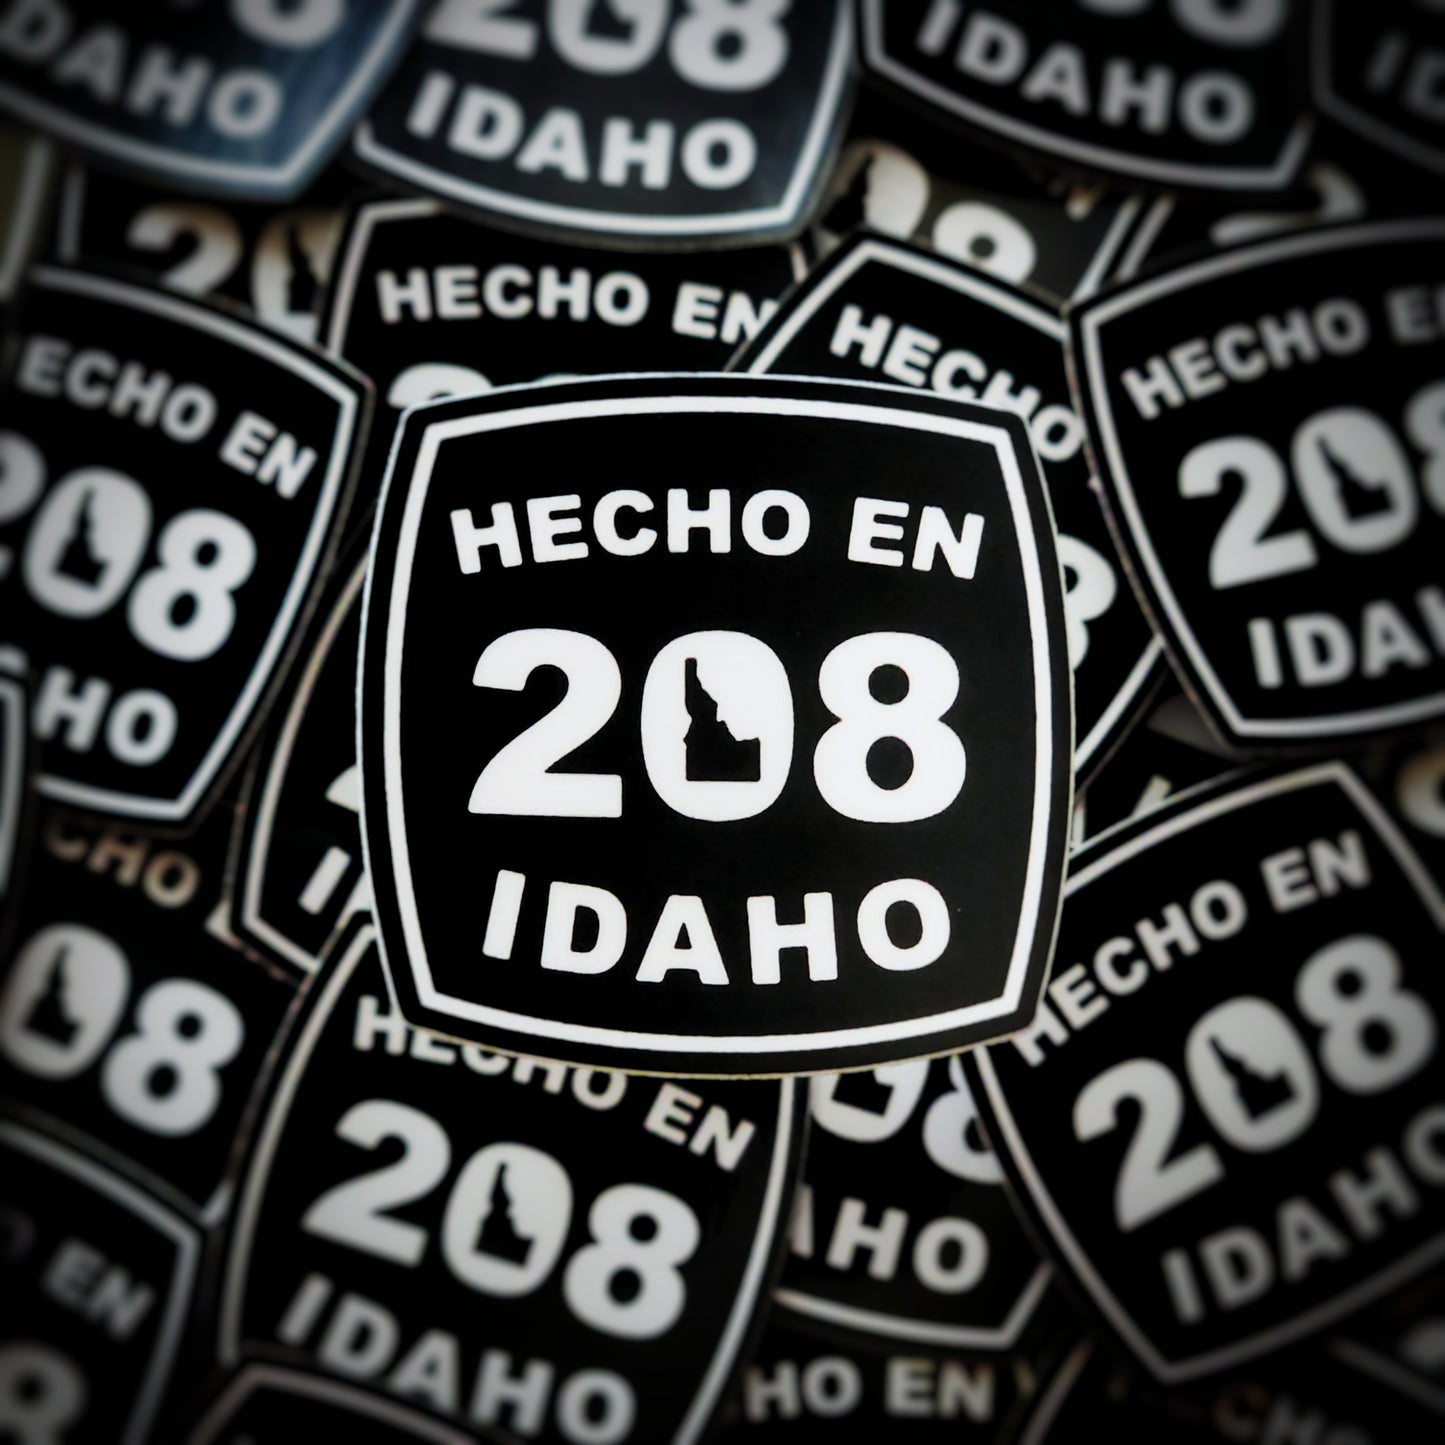 Hecho En Idaho Vinyl Sticker